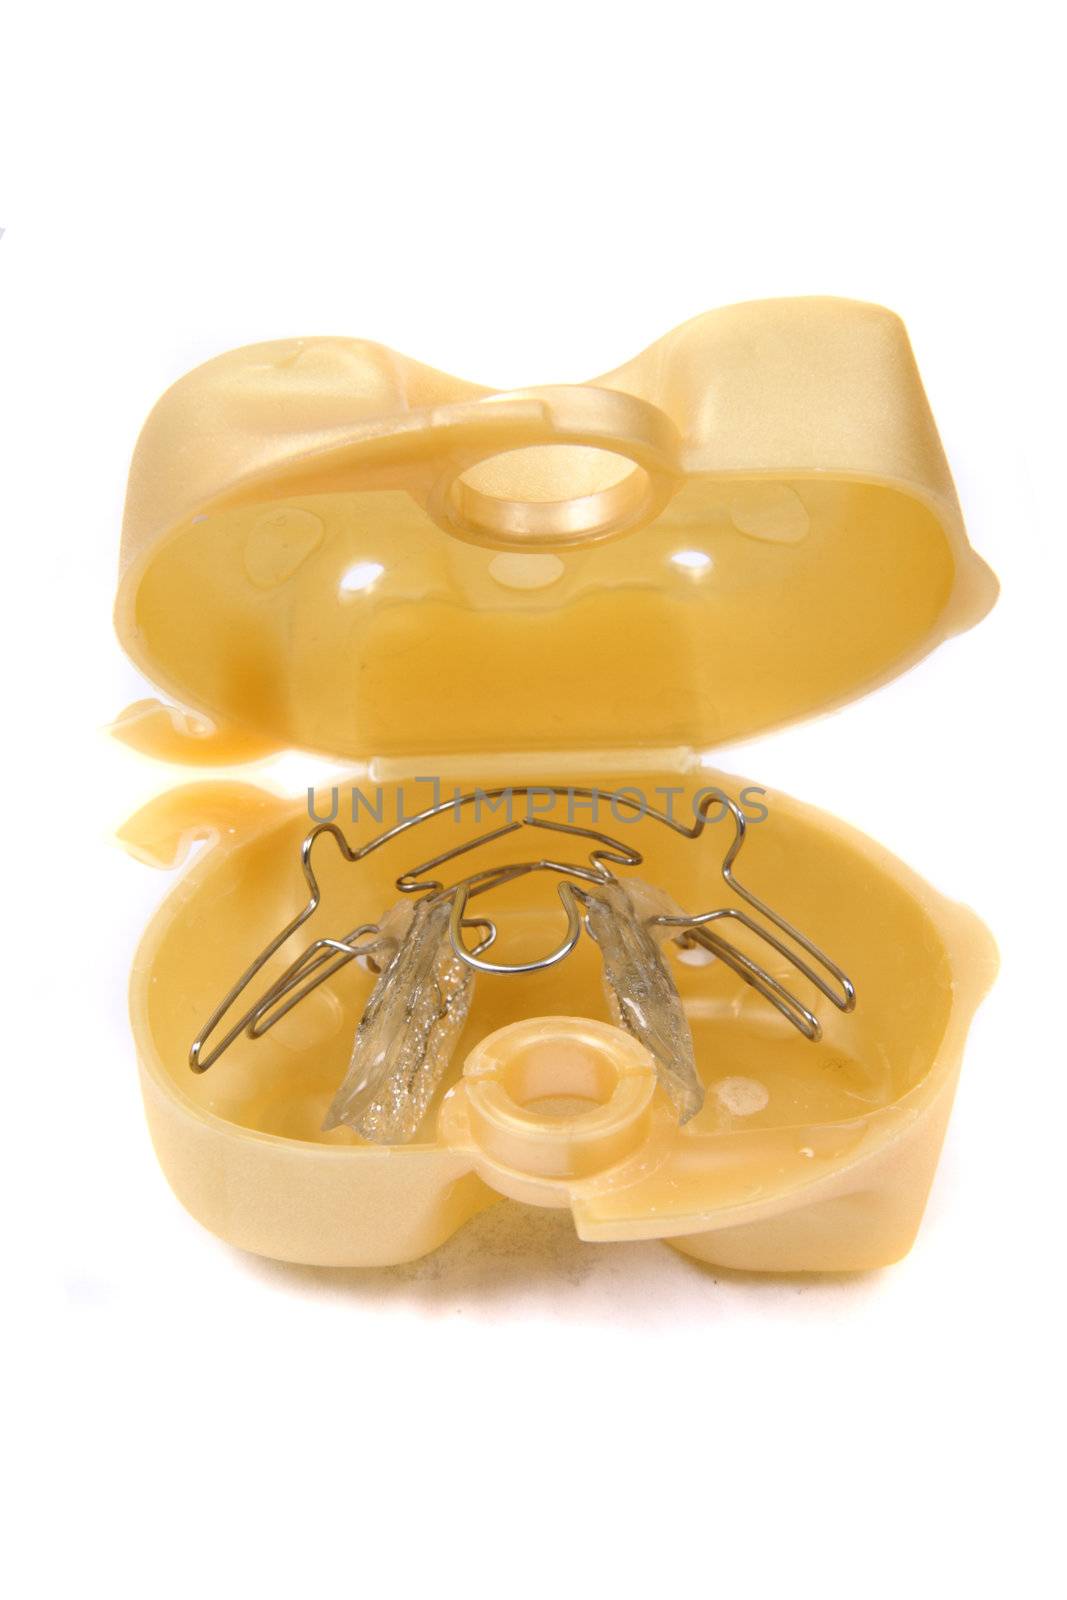 braces (orthodontic tool)  by jonnysek